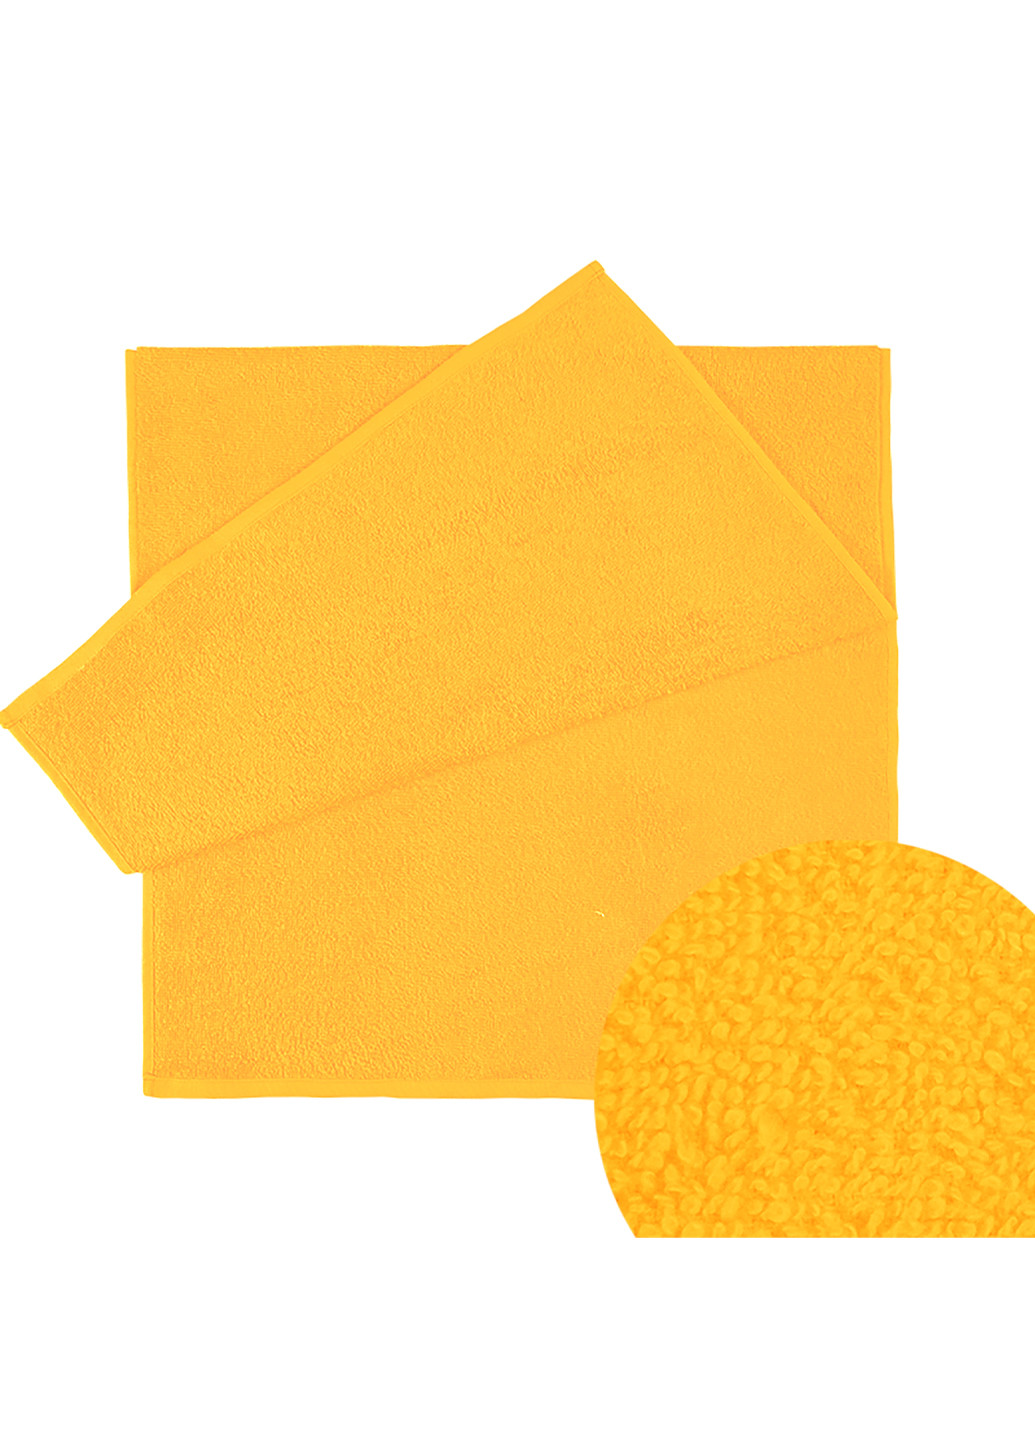 Ярослав полотенце яр-400 махровое 100х150 однотонный желтый производство - Украина